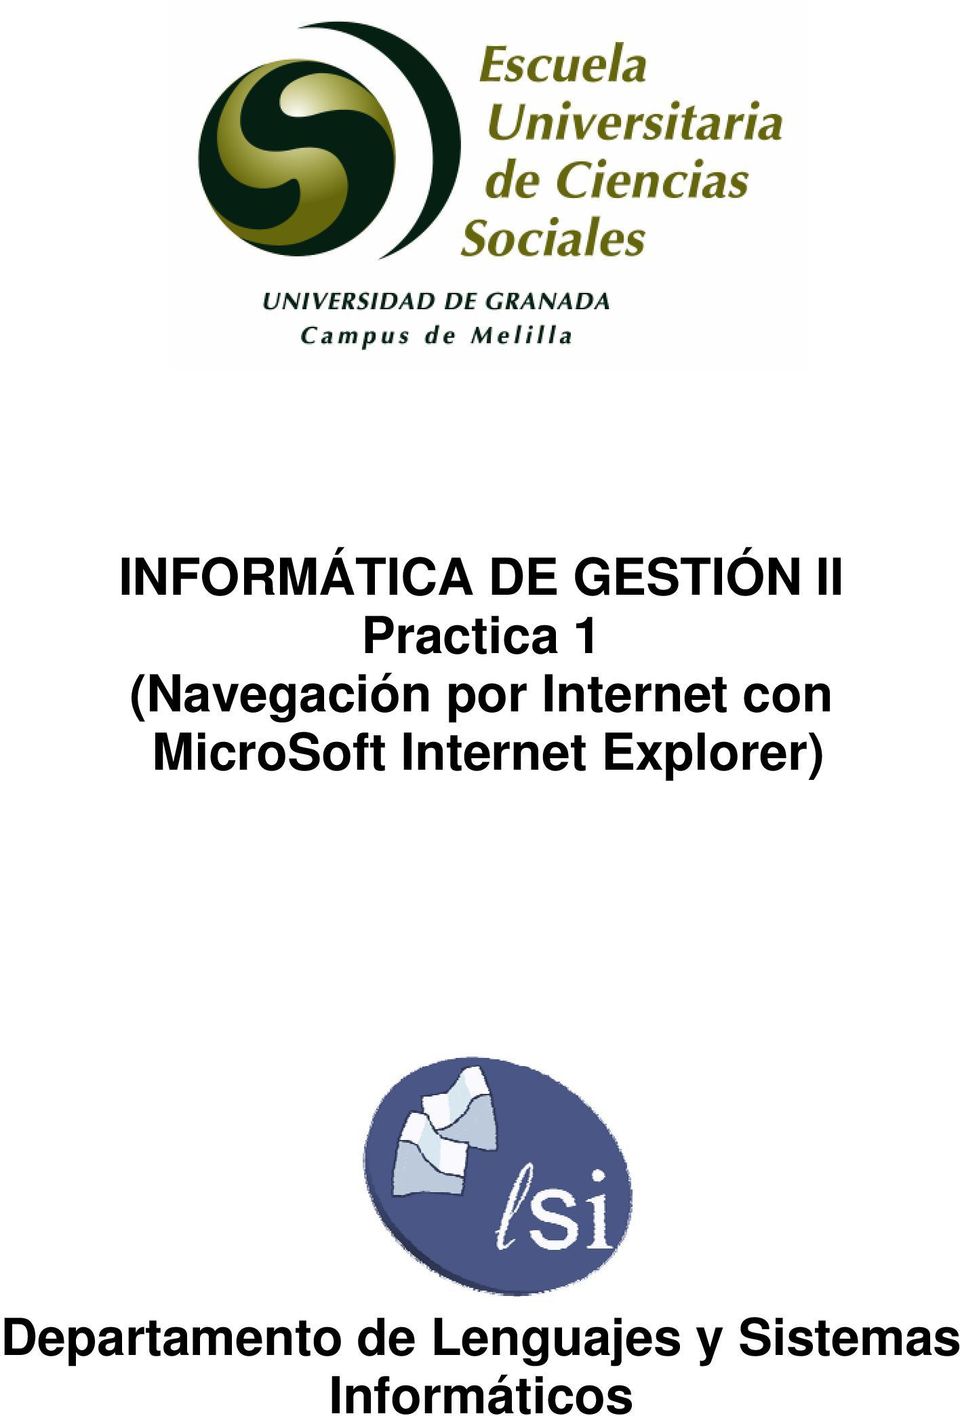 MicroSoft Internet Explorer)